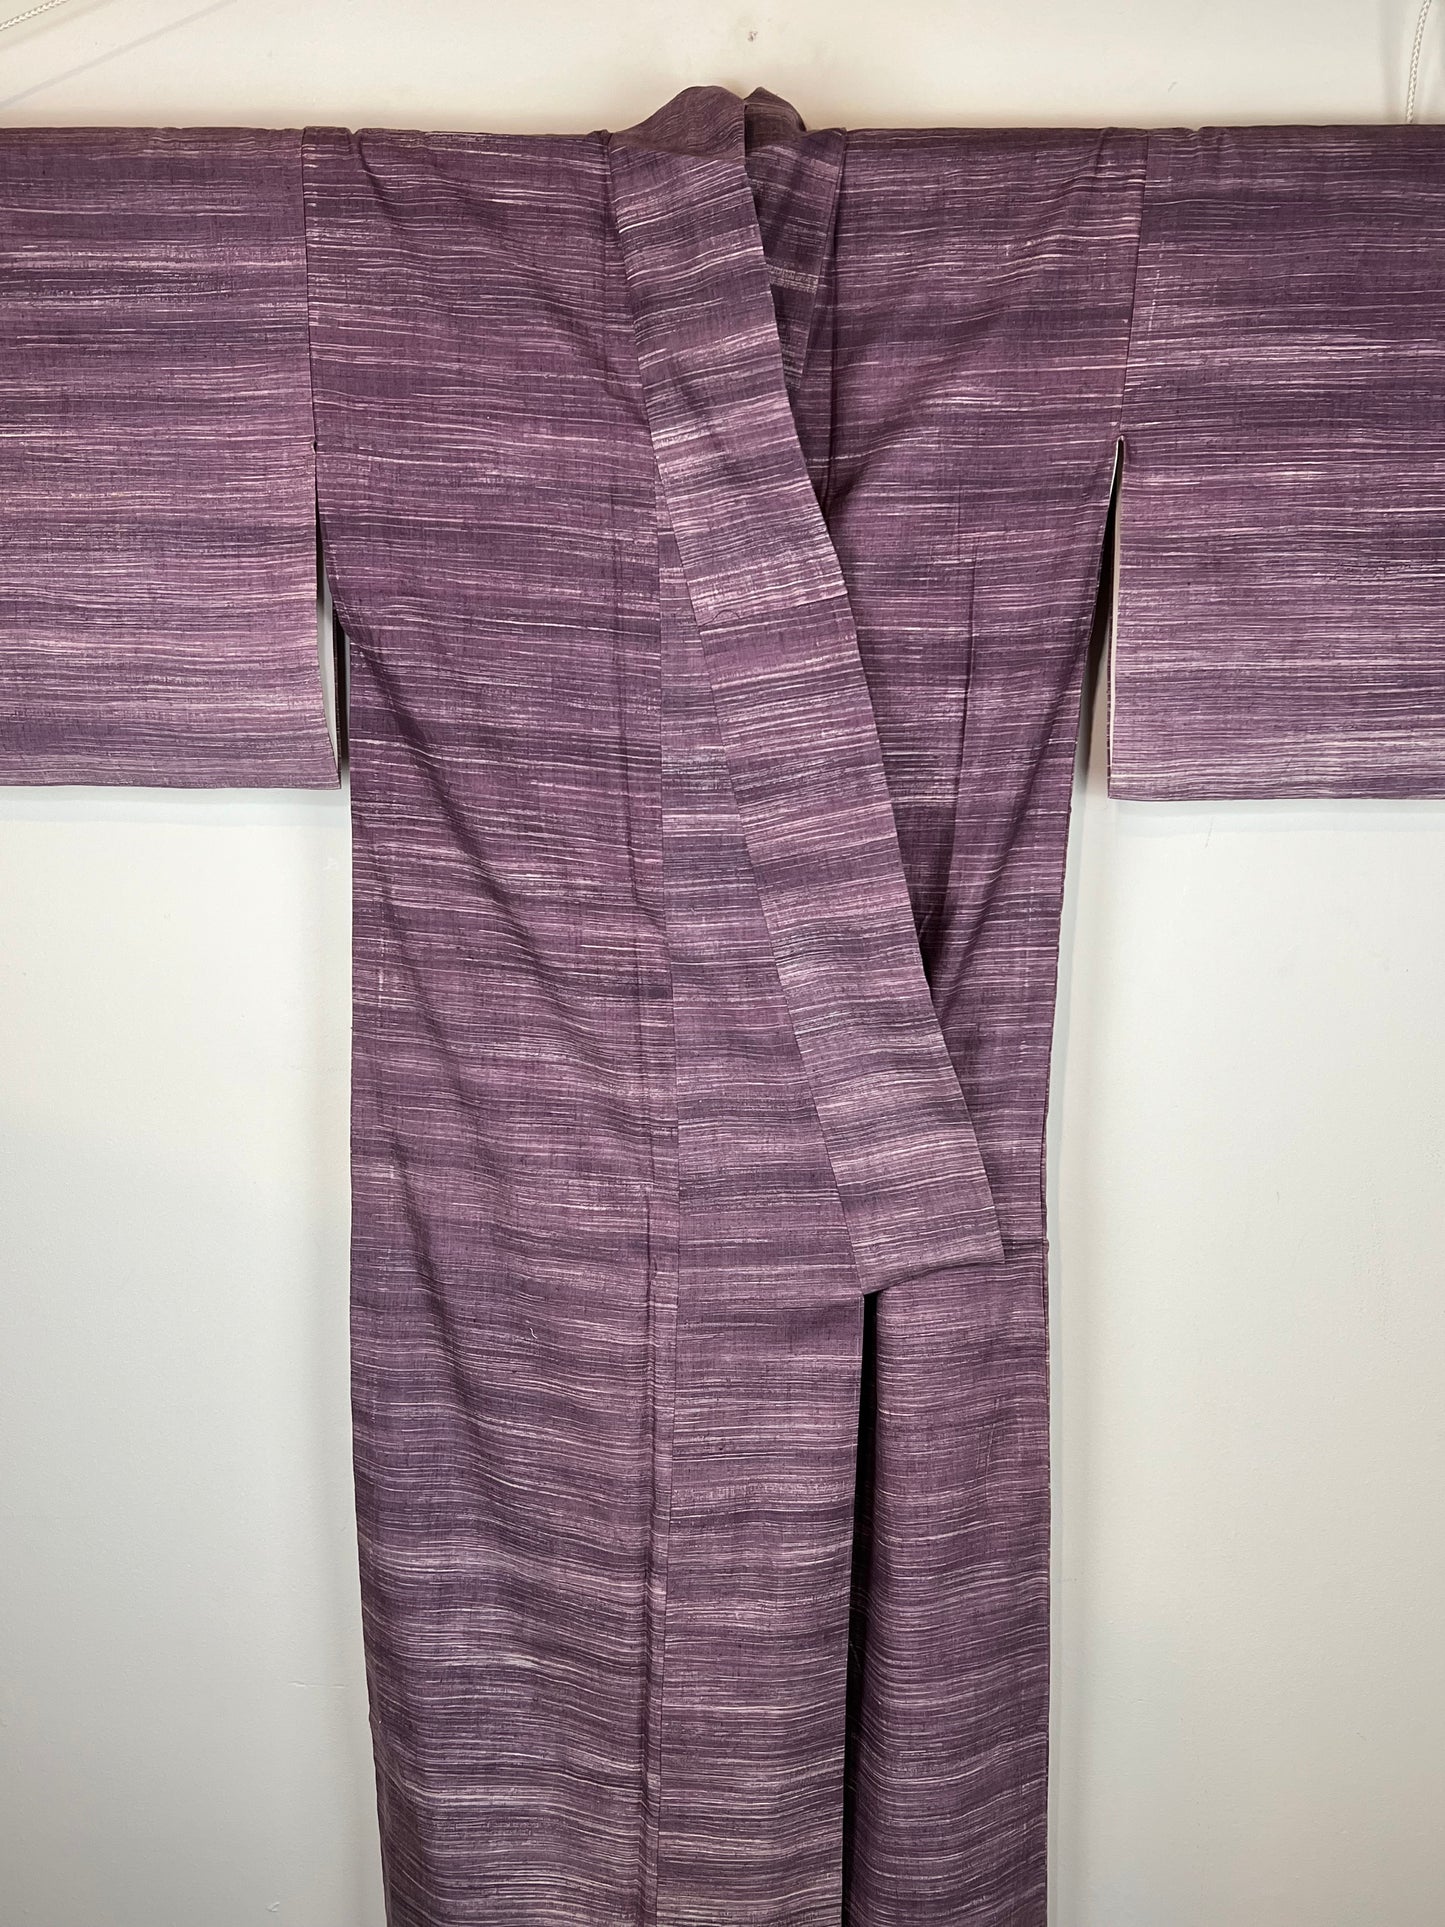 Vintage Japanese Silk Kimono Striated Plum Purple 63"L